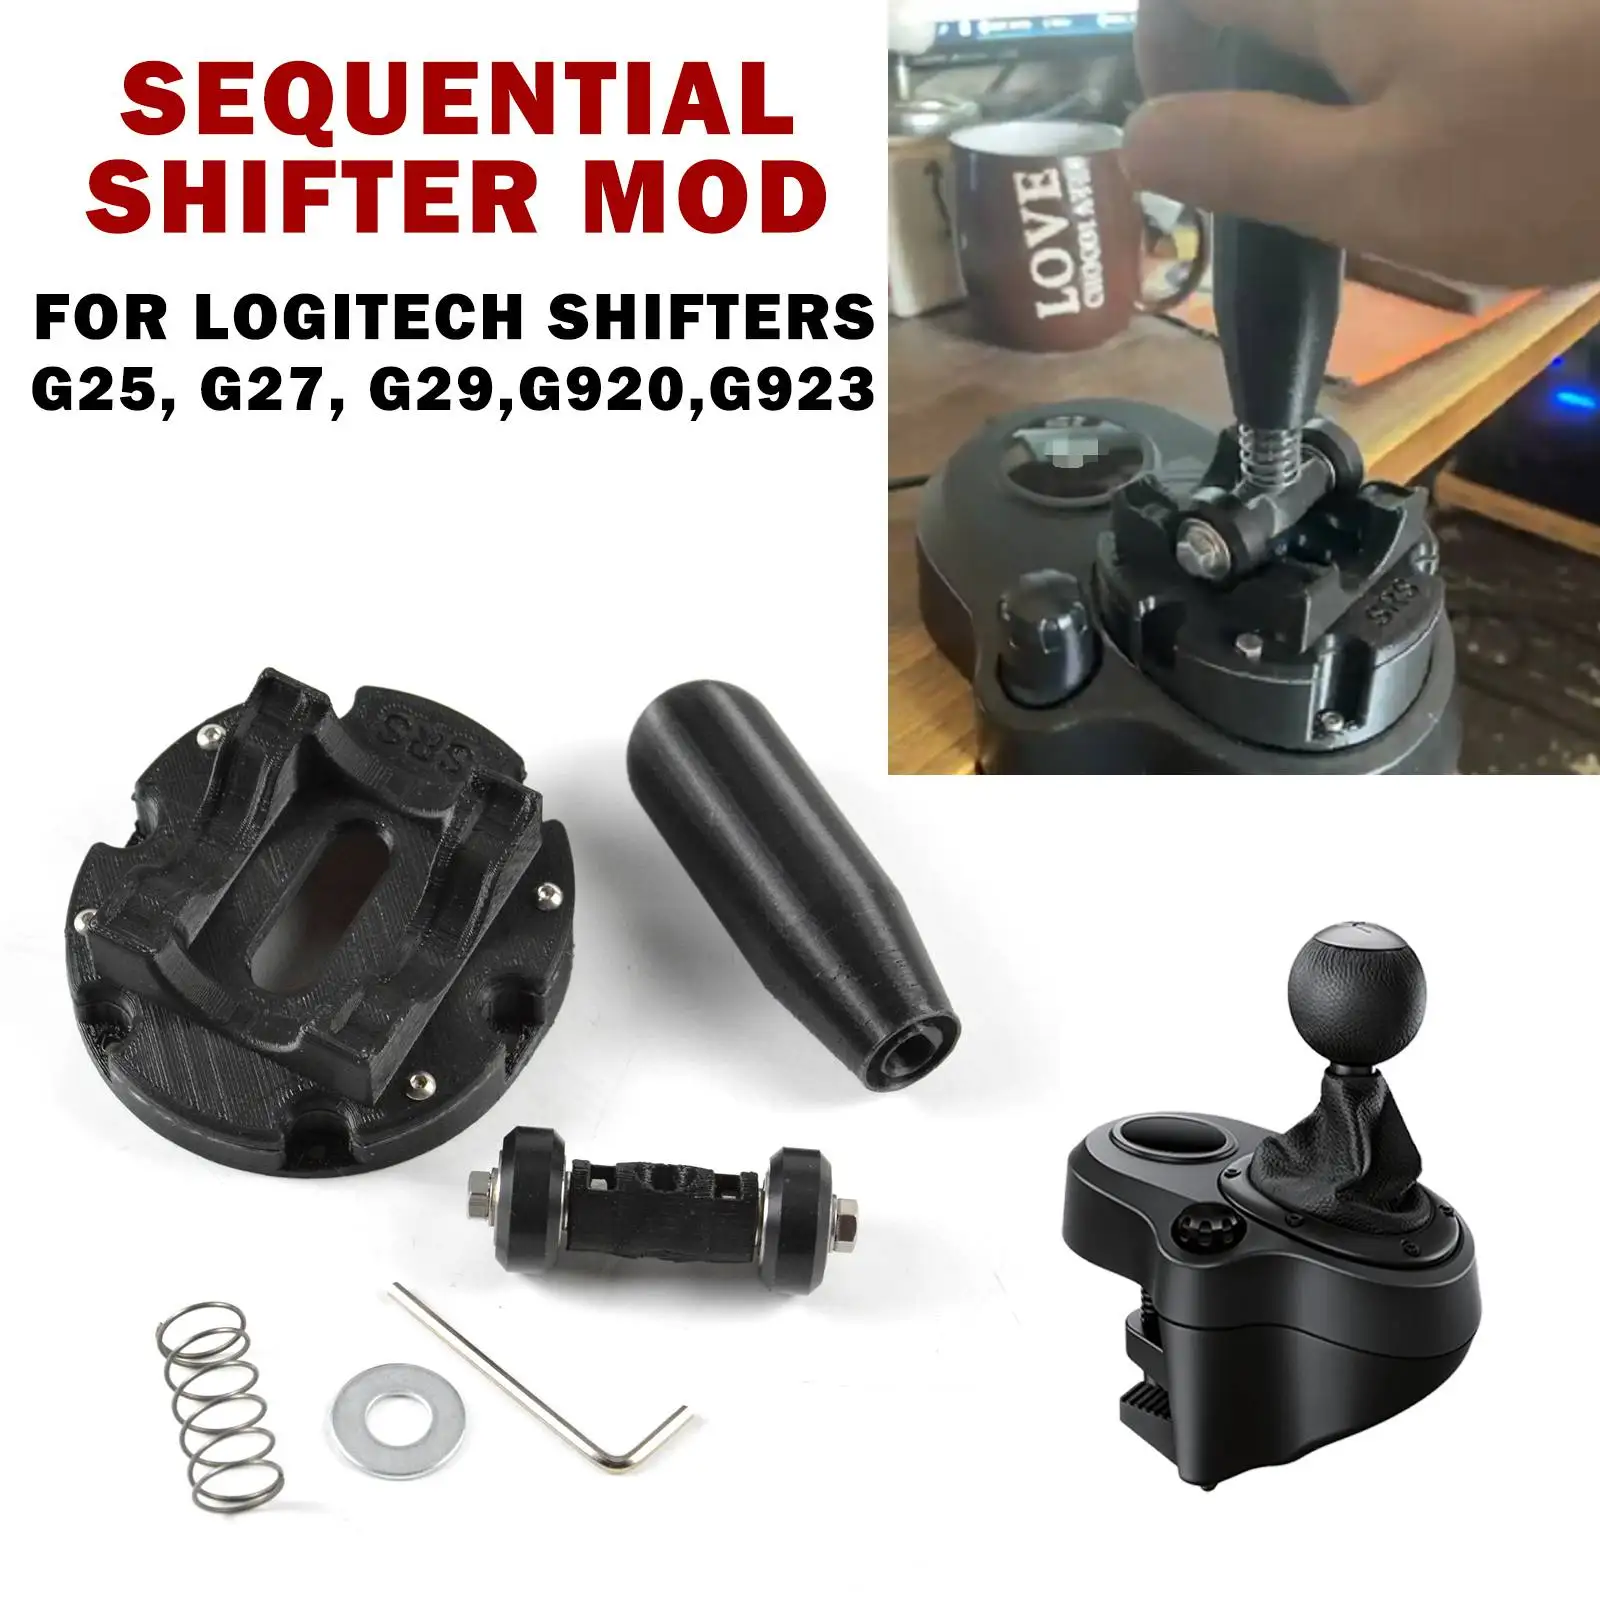 Tanie Sekwencyjny Shifter Mod dla Logitech G27 Logitech G29 G923 G25